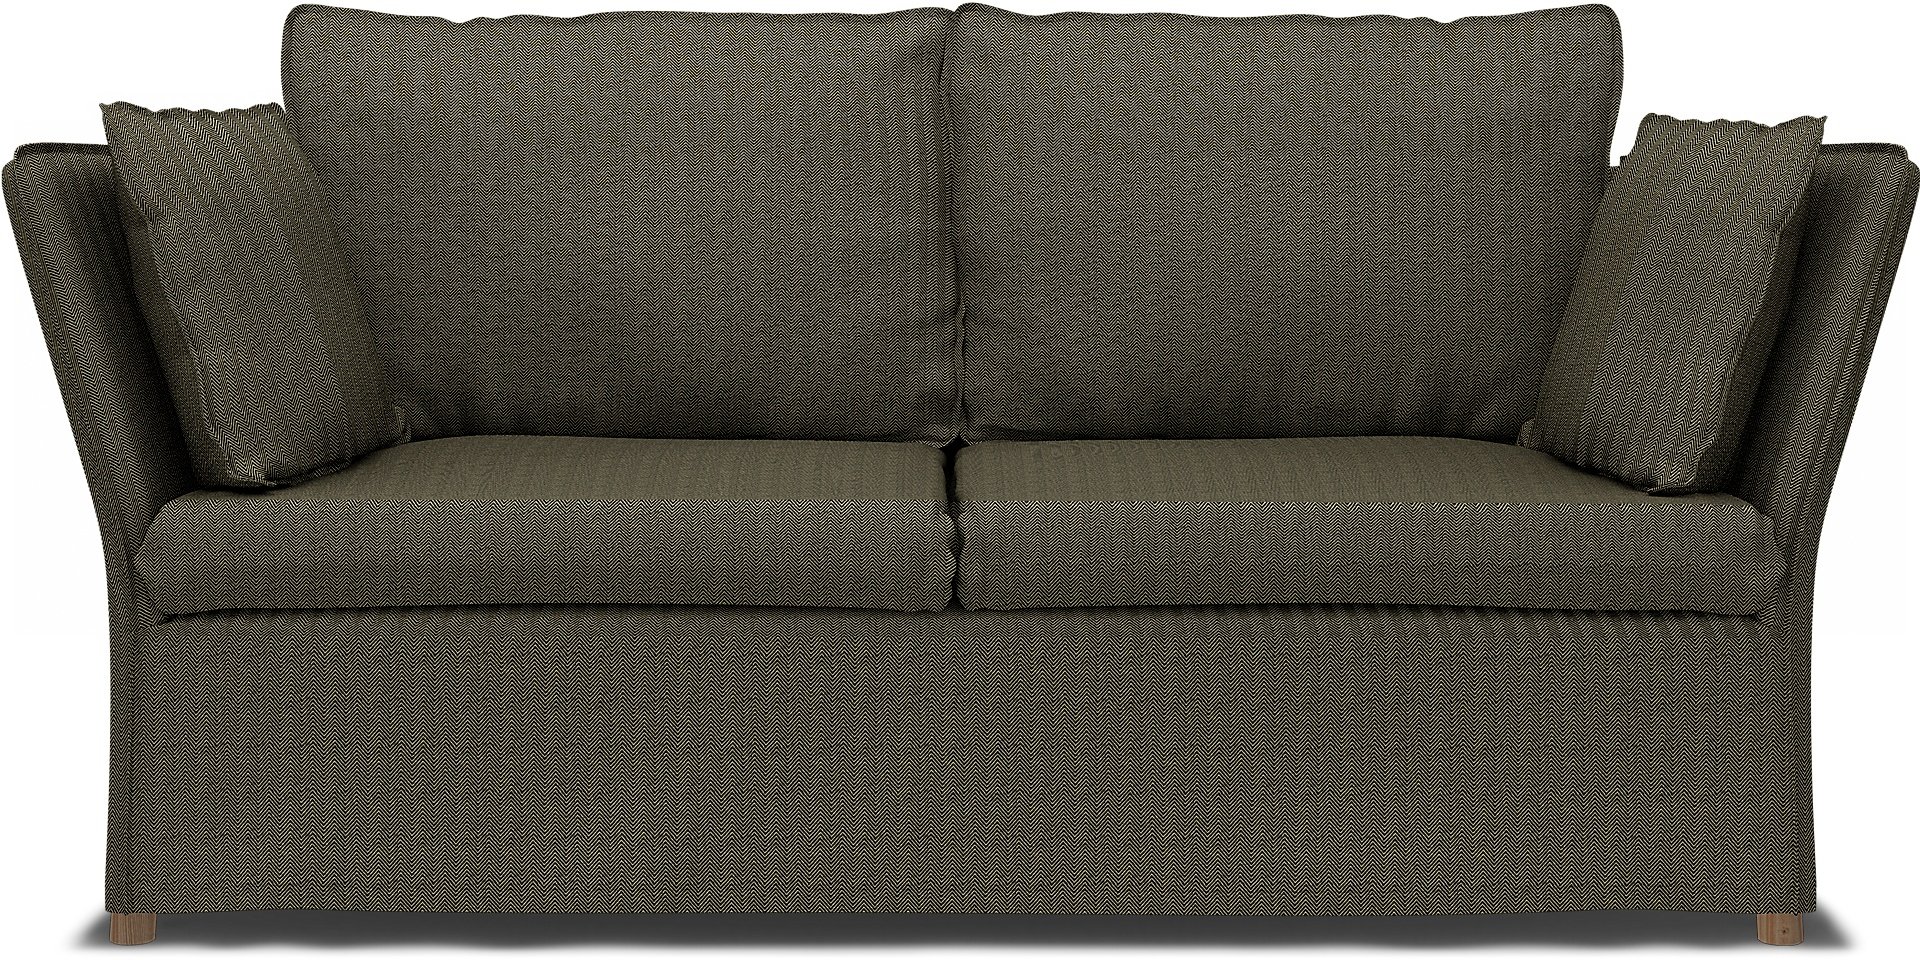 IKEA - Backsalen 2 seater sofa, Jet Black/Sand Beige, Cotton - Bemz